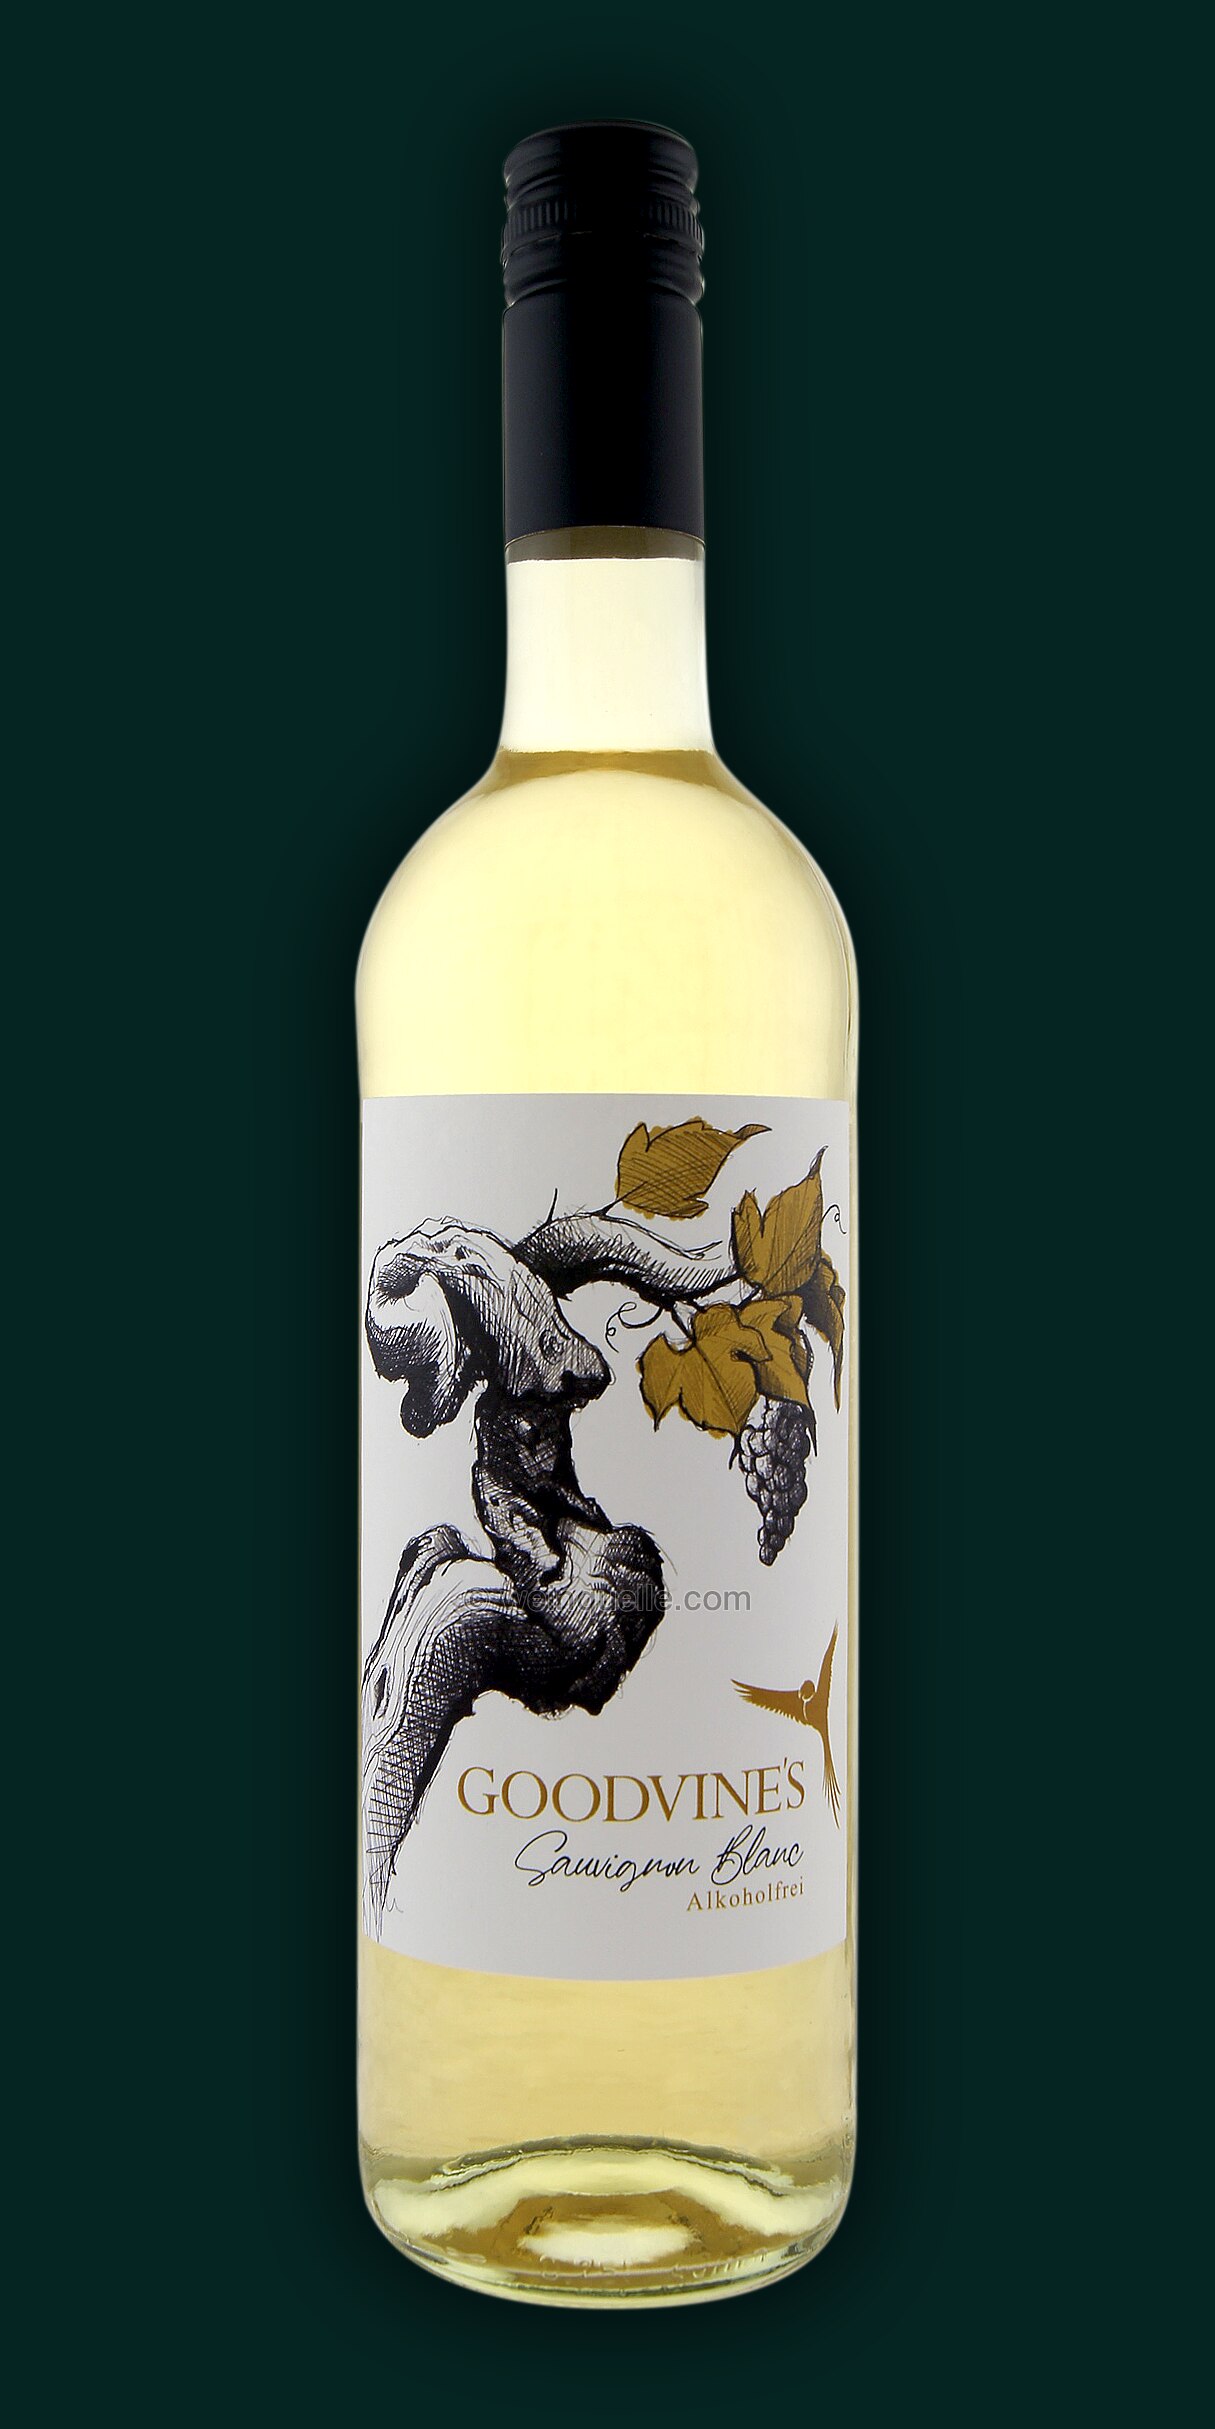 Goodvine's Sauvignon Blanc Alkoholfrei, 9,75 € - Weinquelle Lühmann